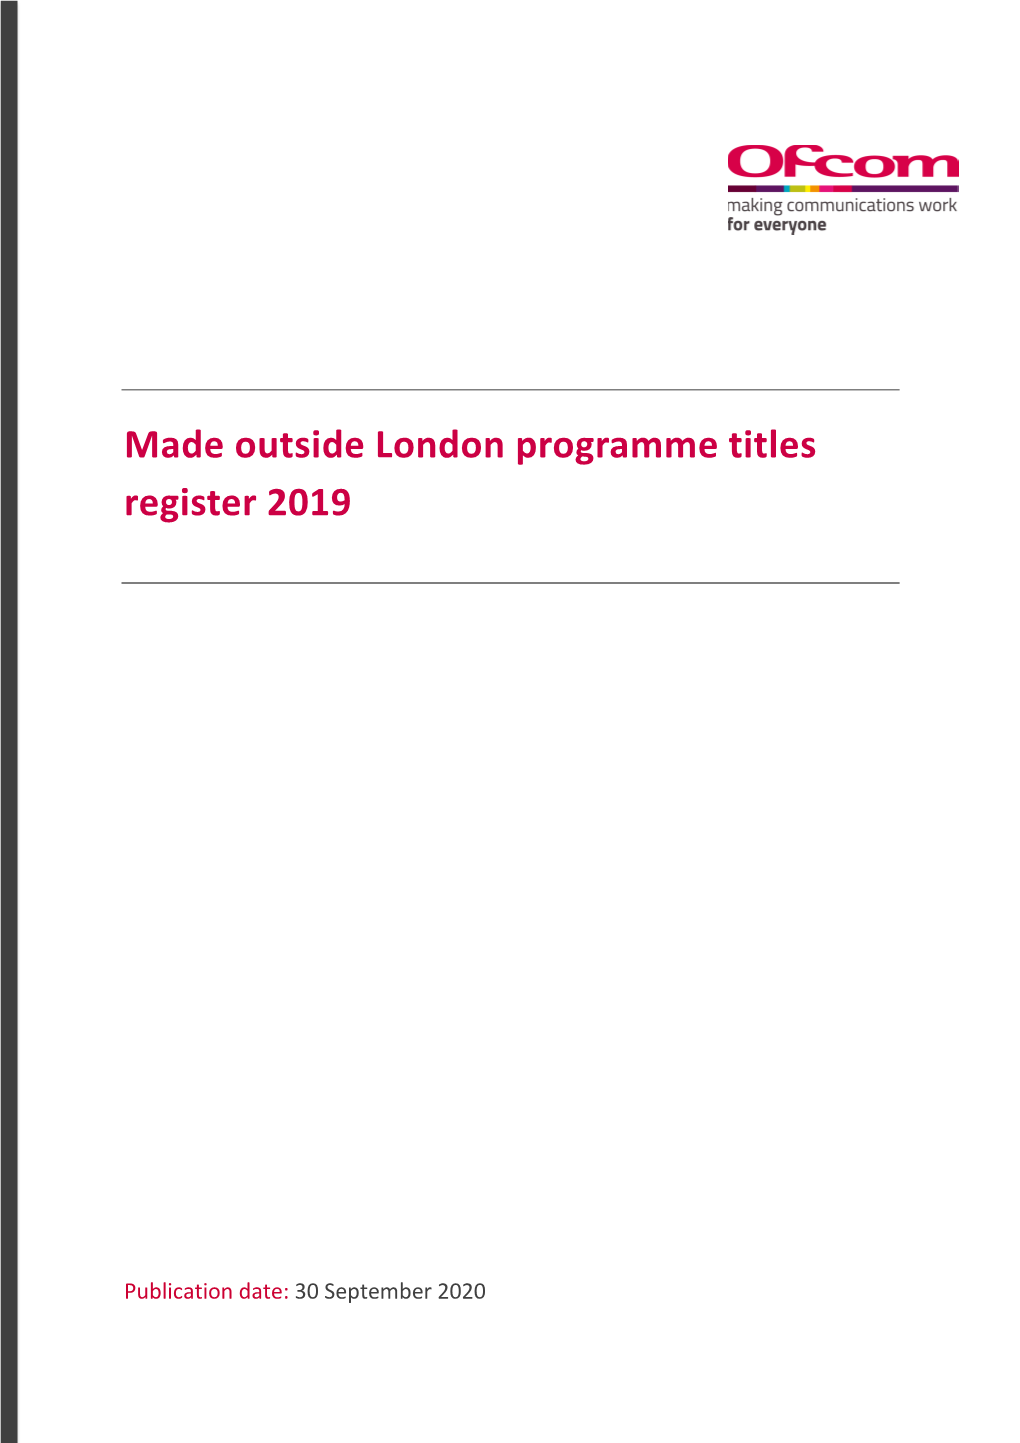 Made Outside London Programme Titles Register 2019